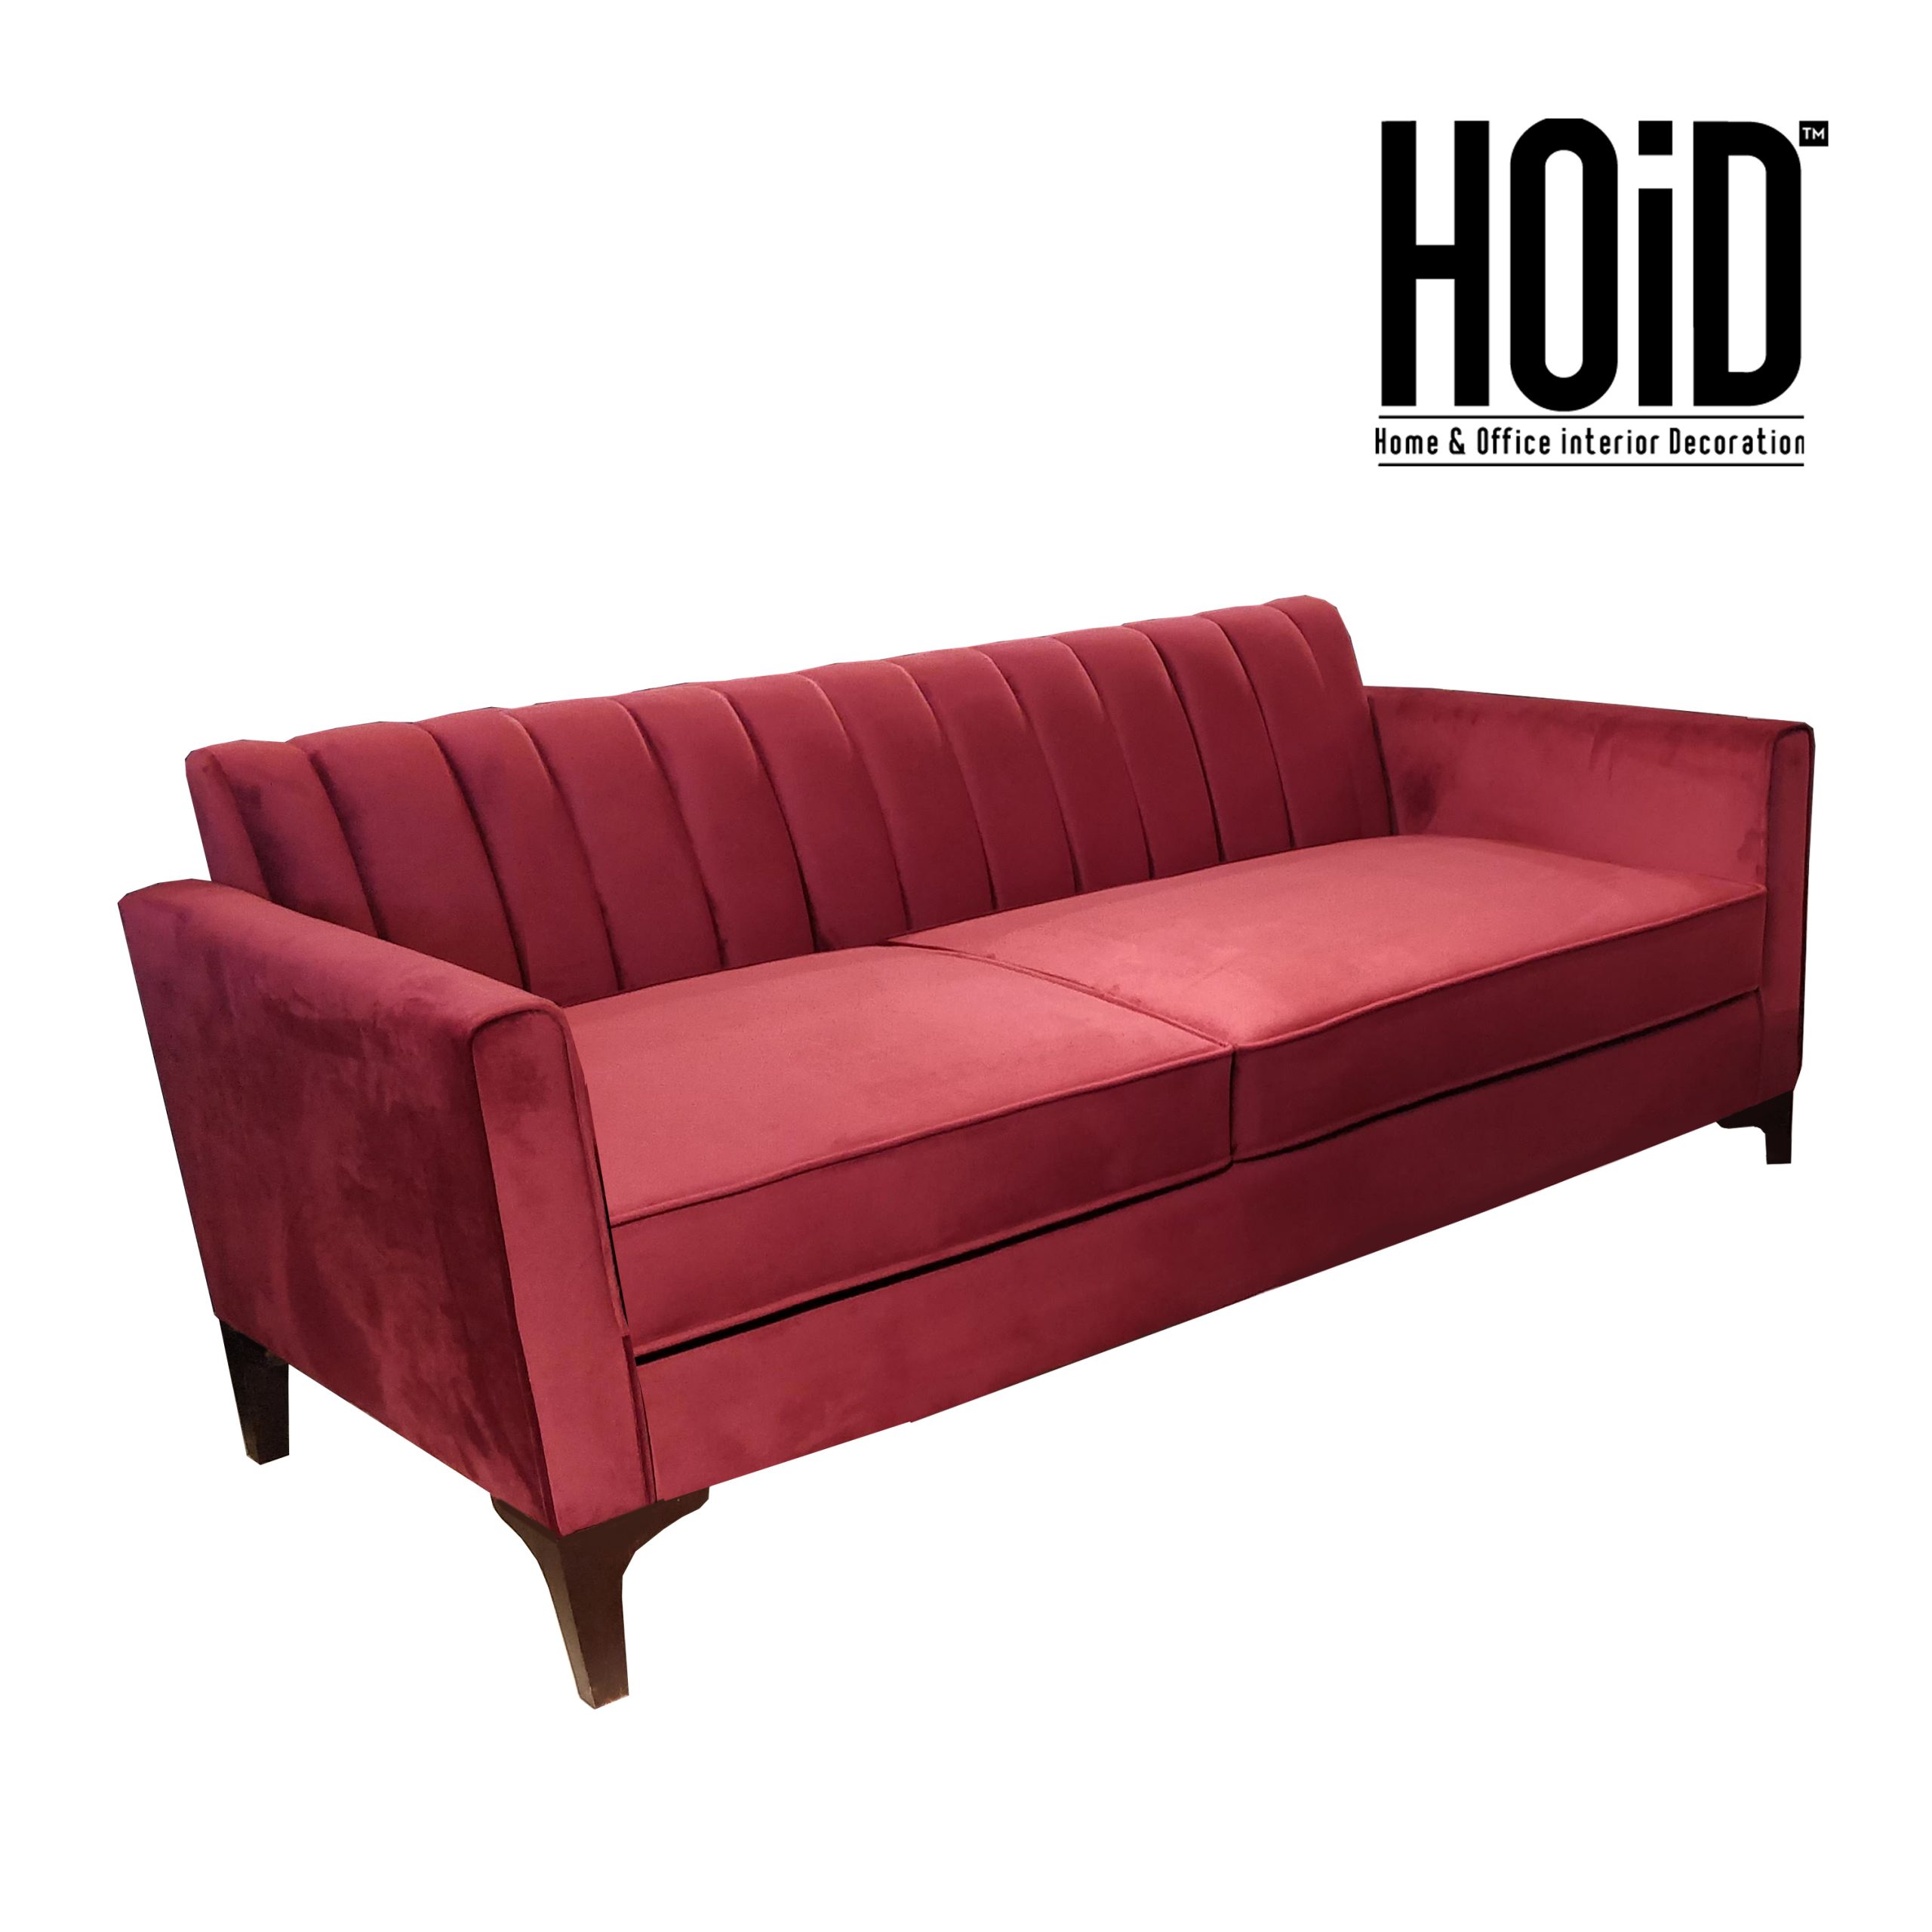 heel-2.5-seater-sofa-scaled-2.jpg